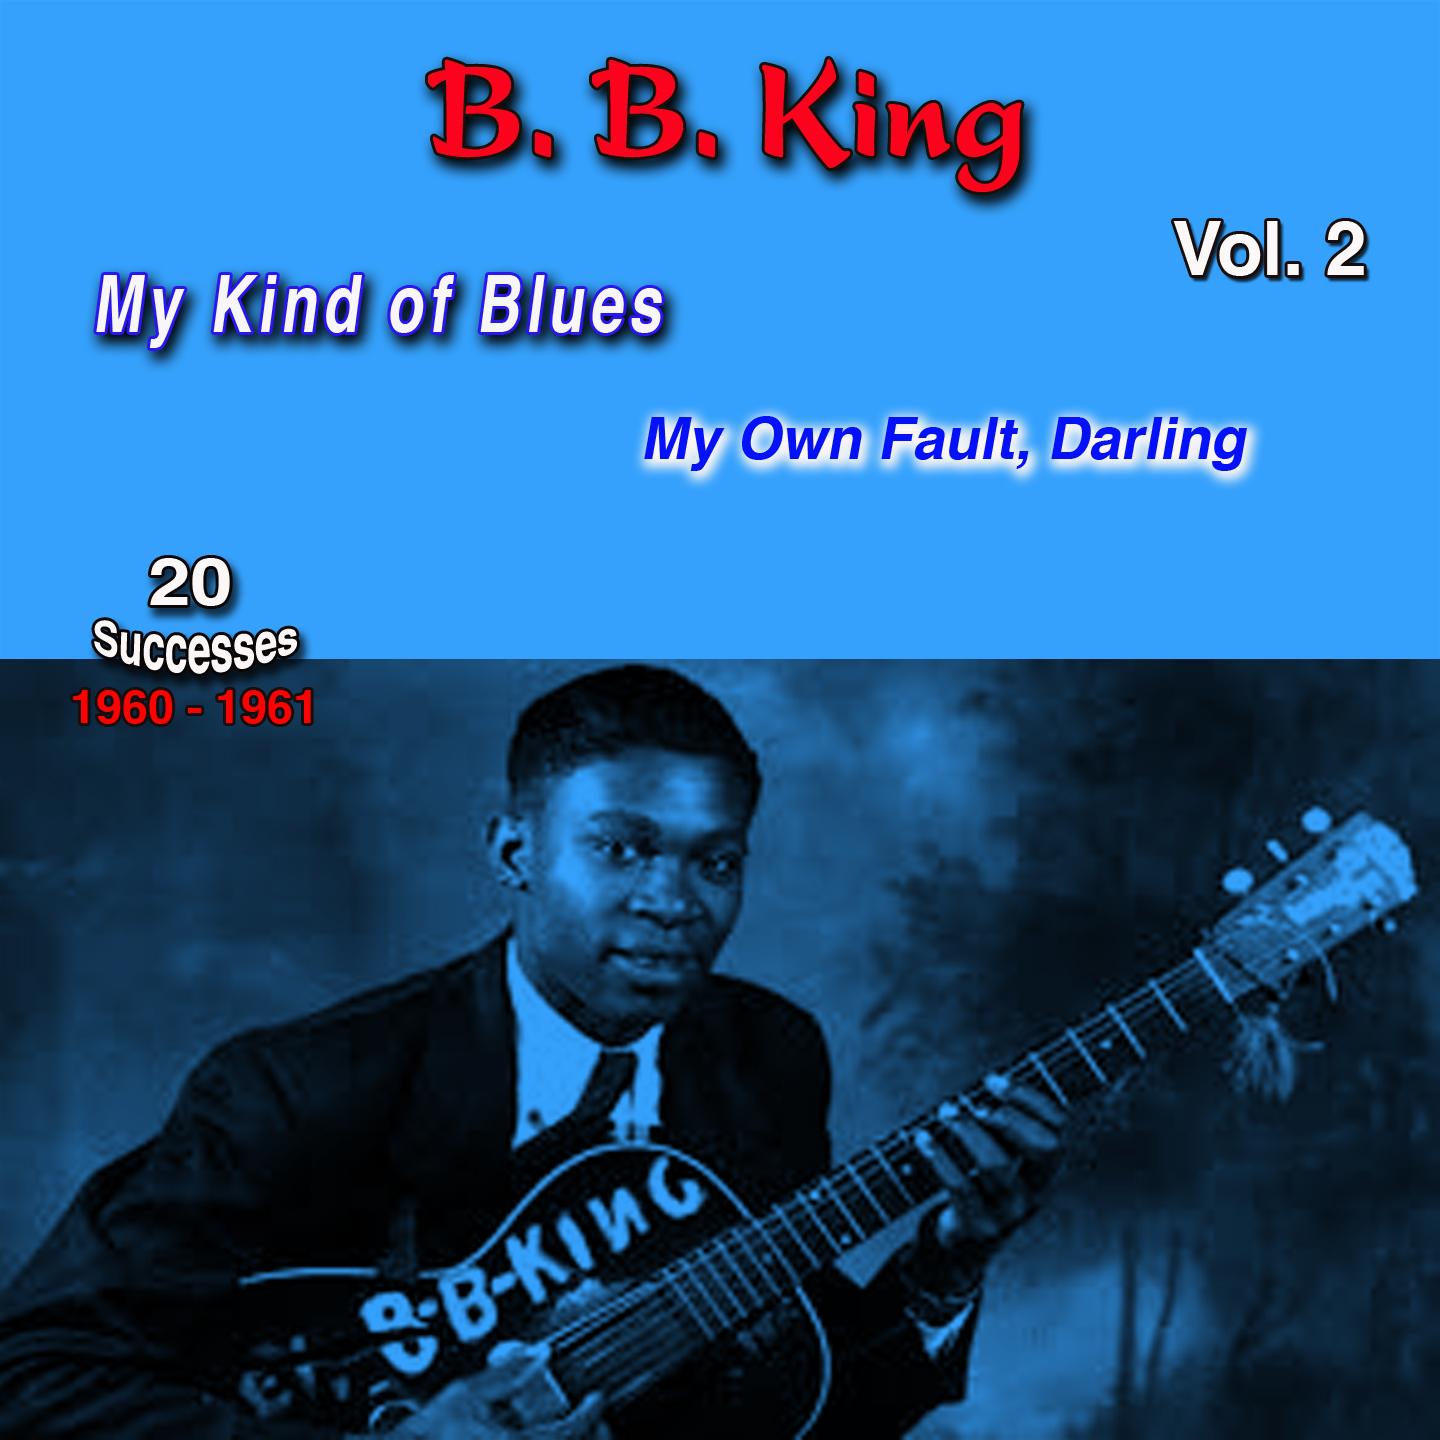 B.B. King Vol. 2, My Kind of Blues, 1960-1961, (20 Successes) (My Own Fault, Darling)